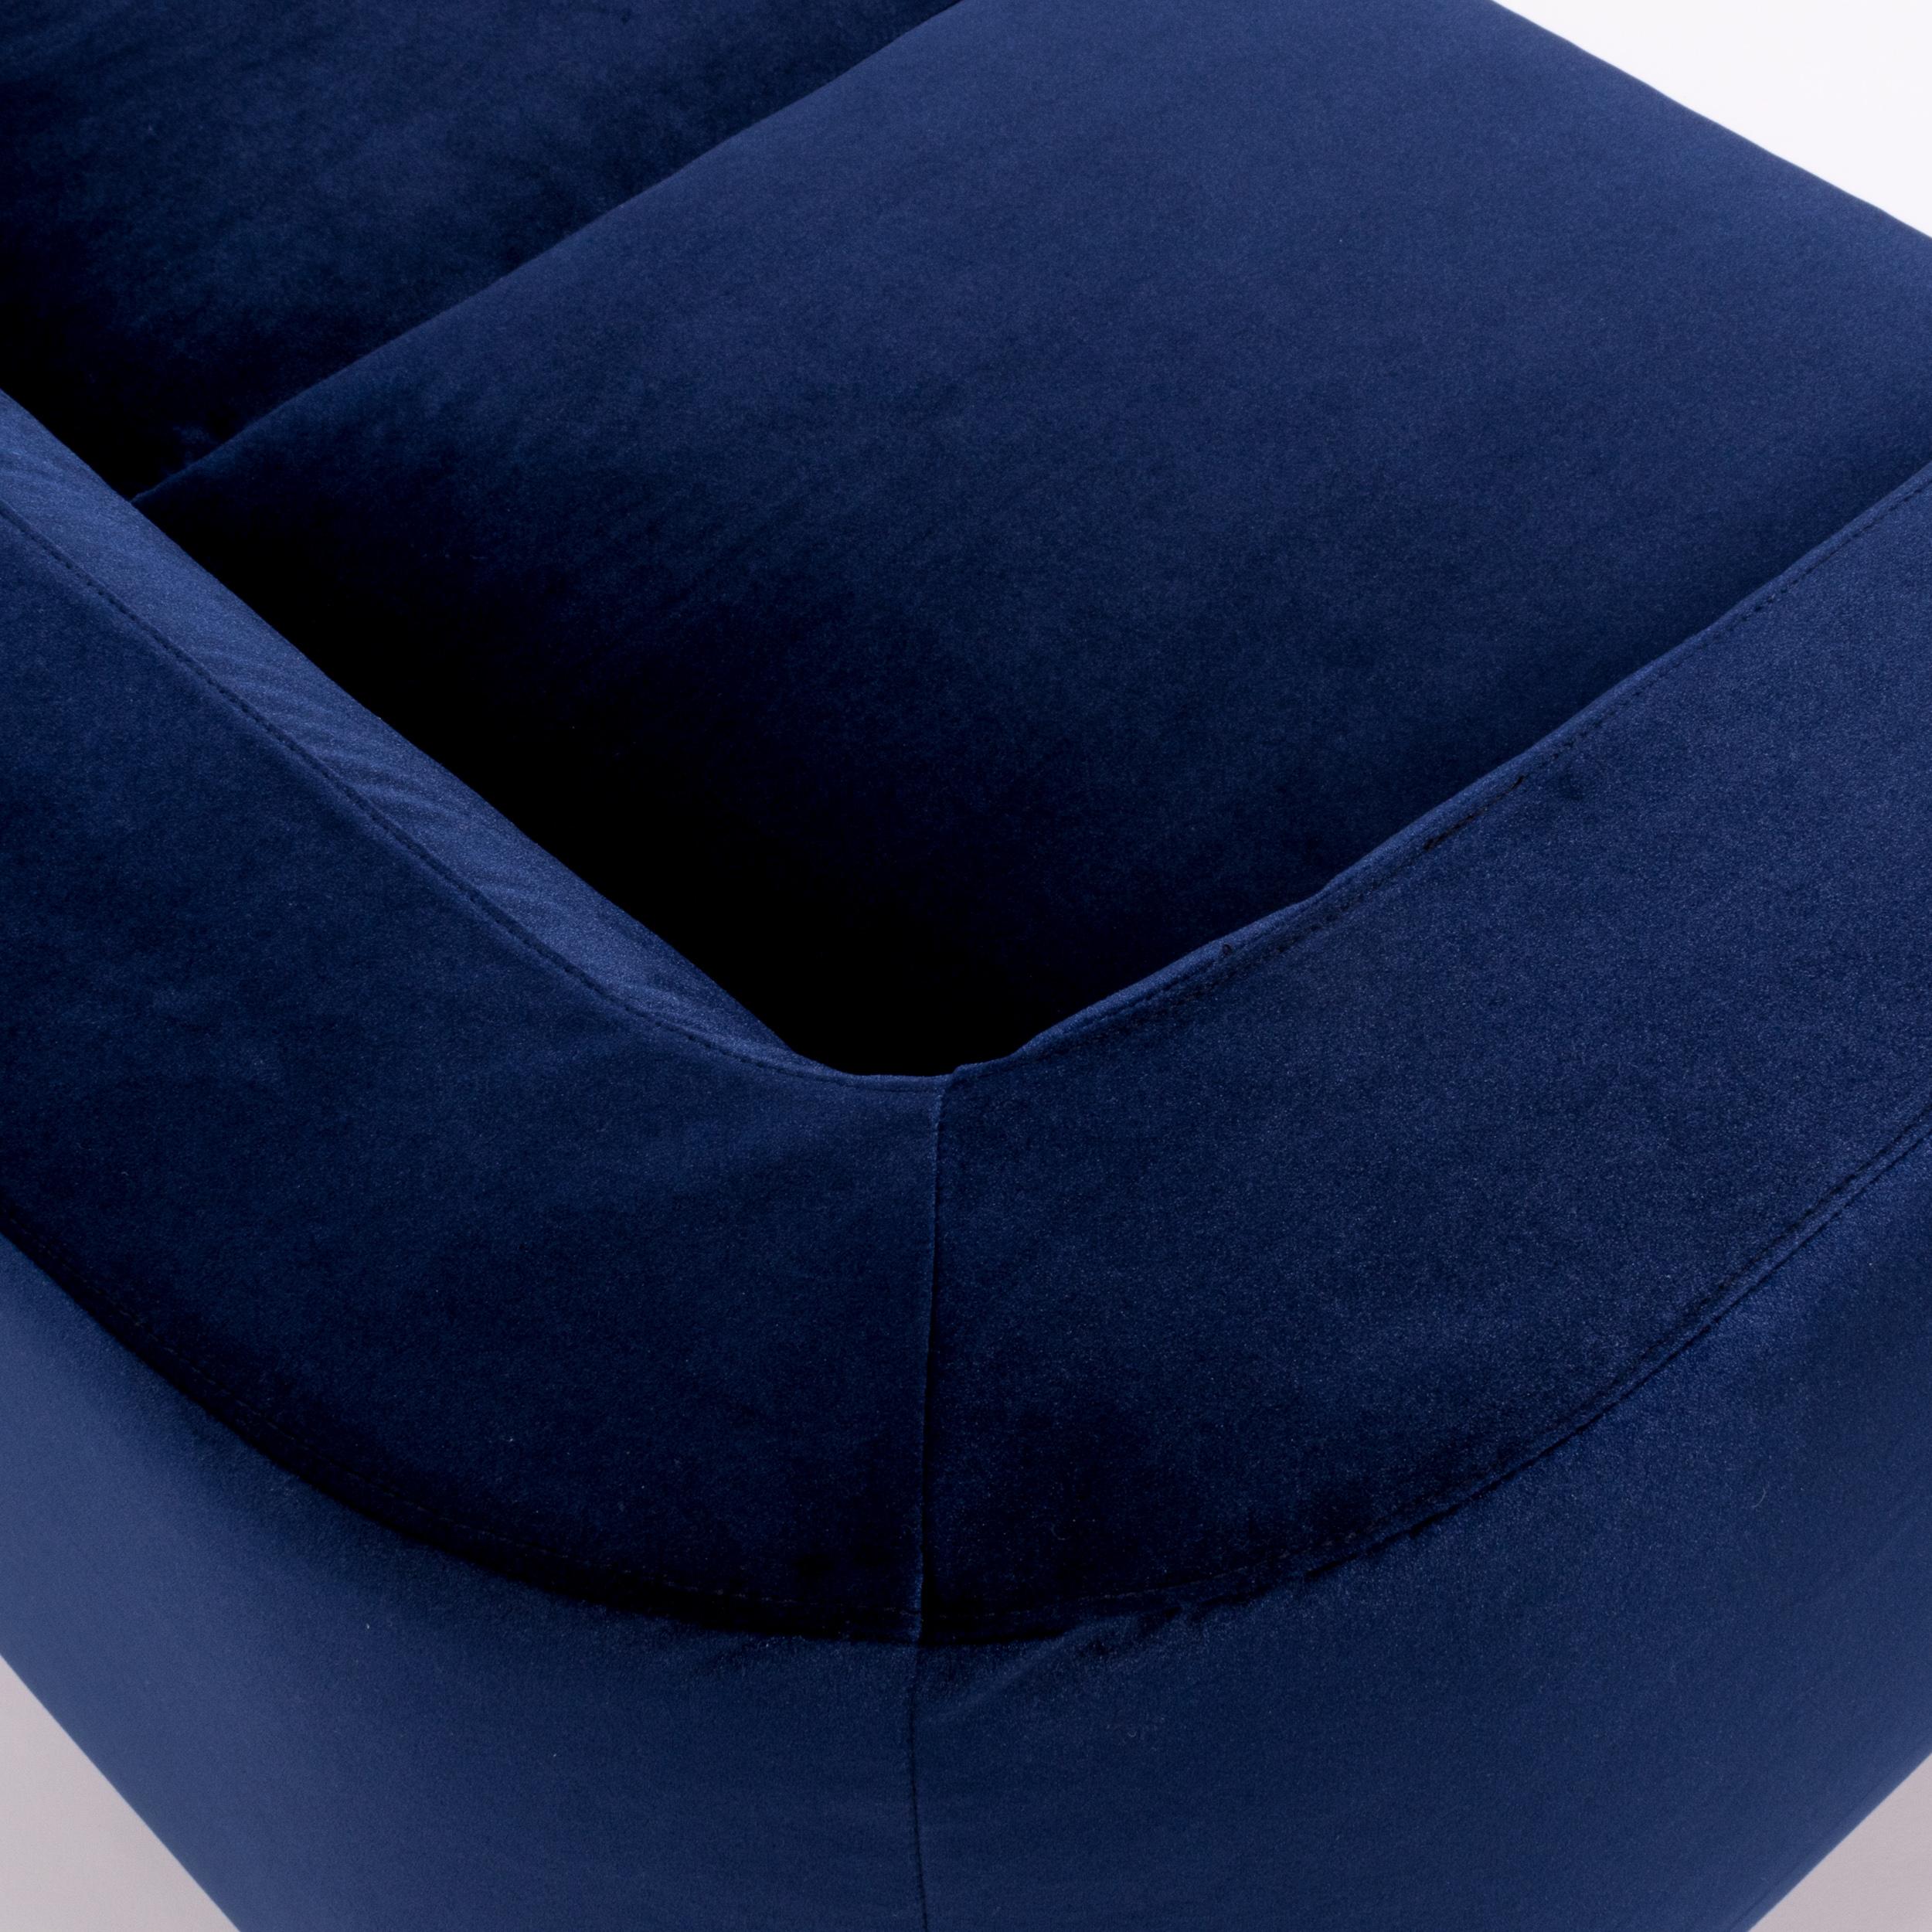 Fabric Dubuffet Three-Seat Sofa by Rodolfo Dordoni for Minotti in Deep Blue Velvet